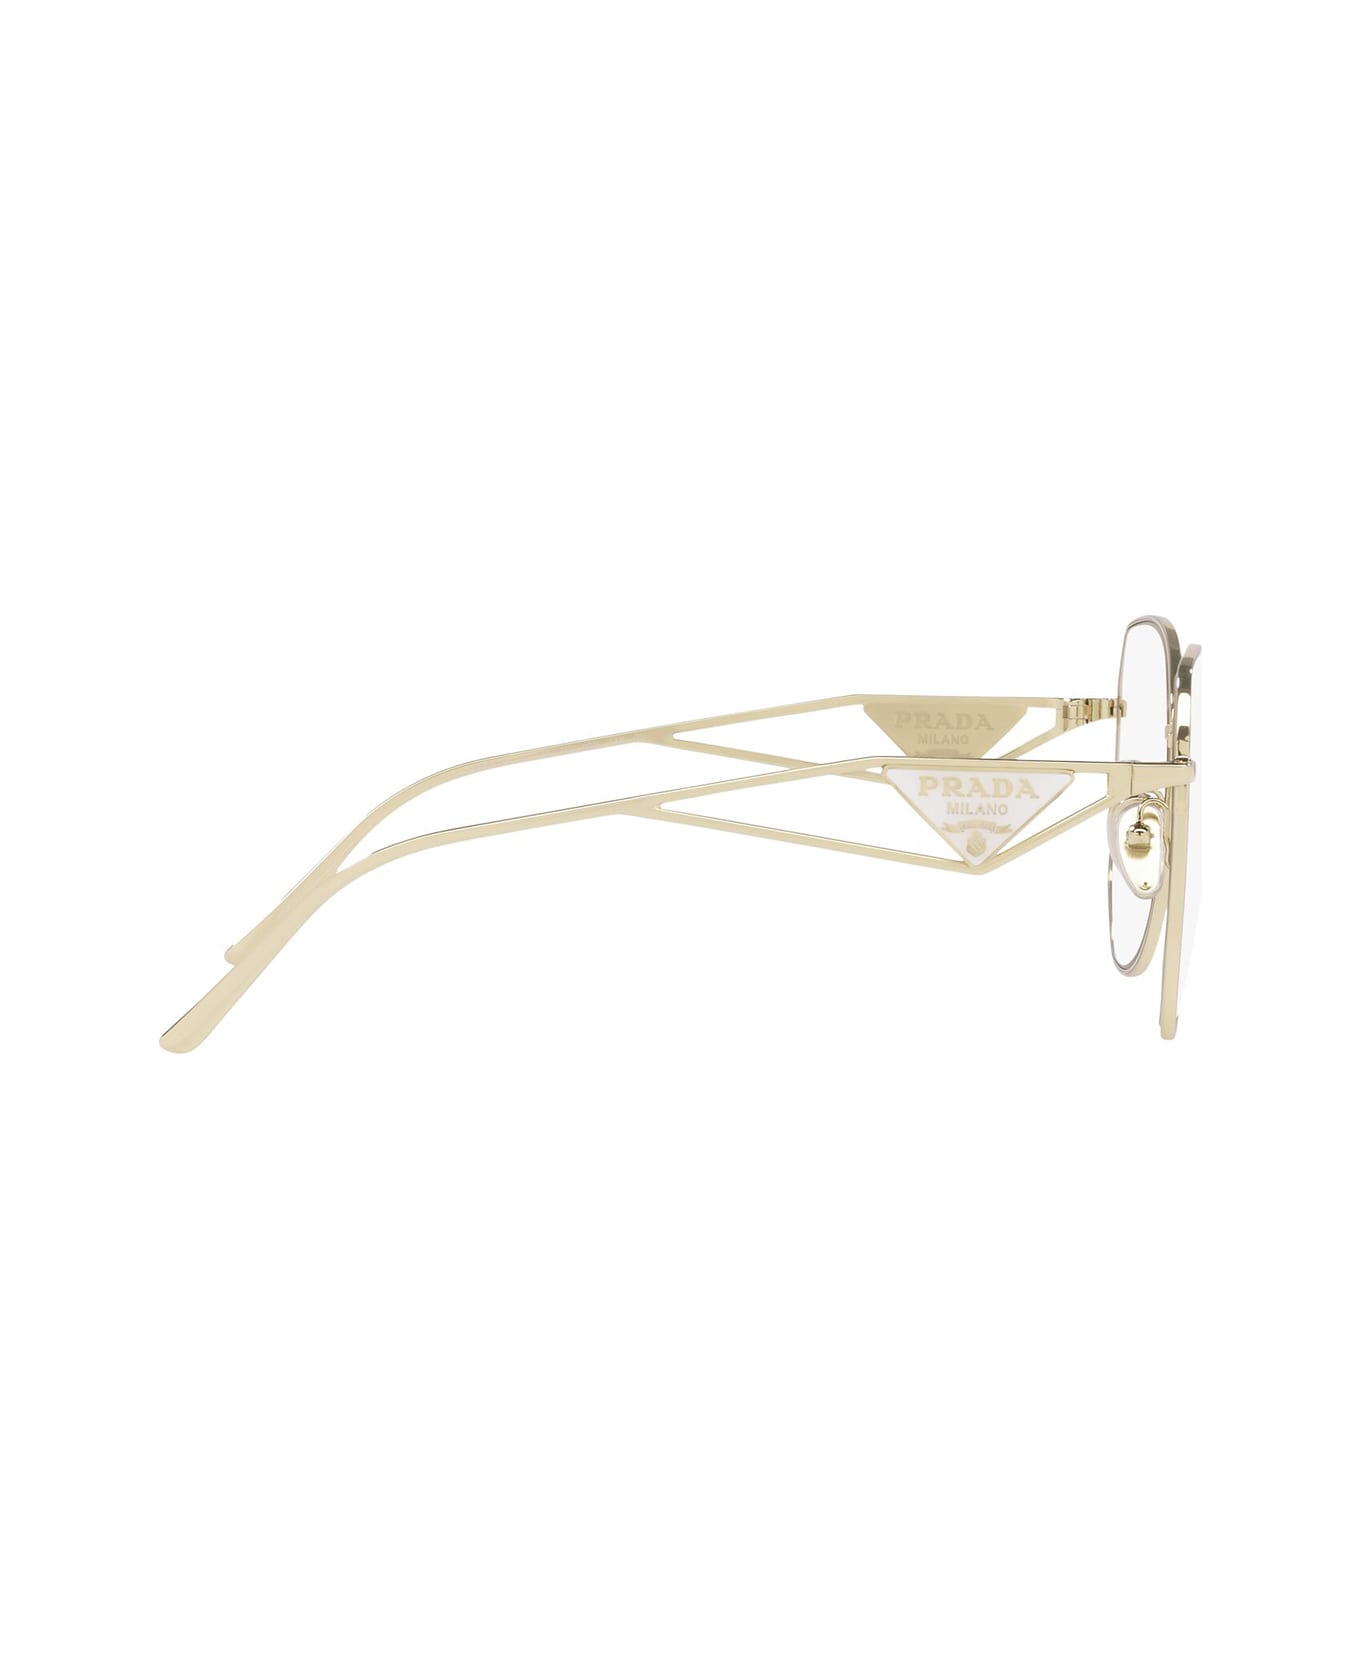 Prada Eyewear Pr 57ys Pale Gold Sunglasses - Pale Gold